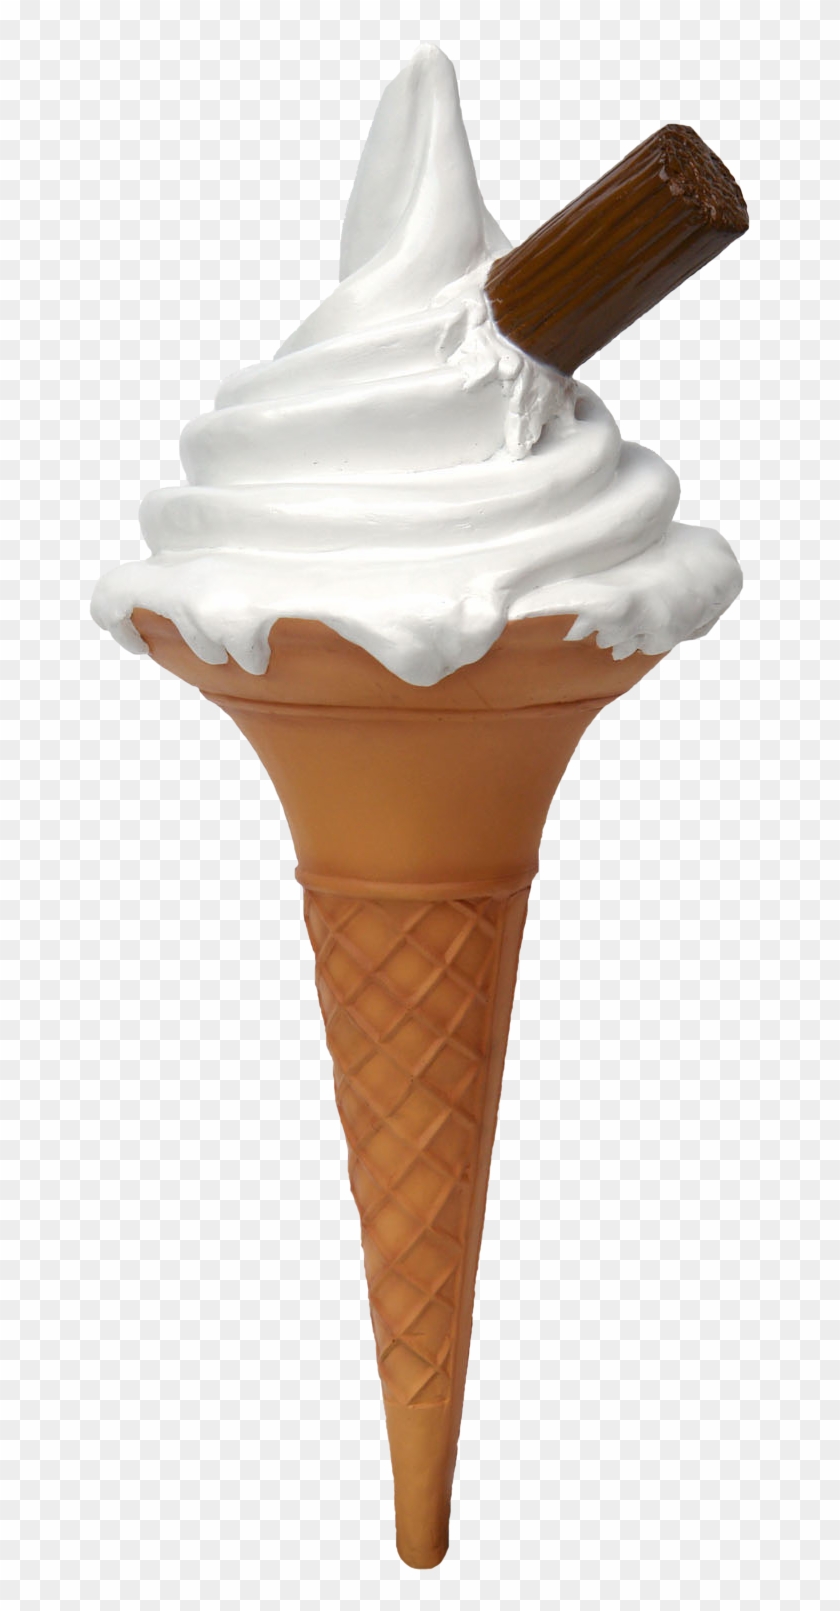 Ice Cream Sign - Ice Cream Cone With Flake #450549